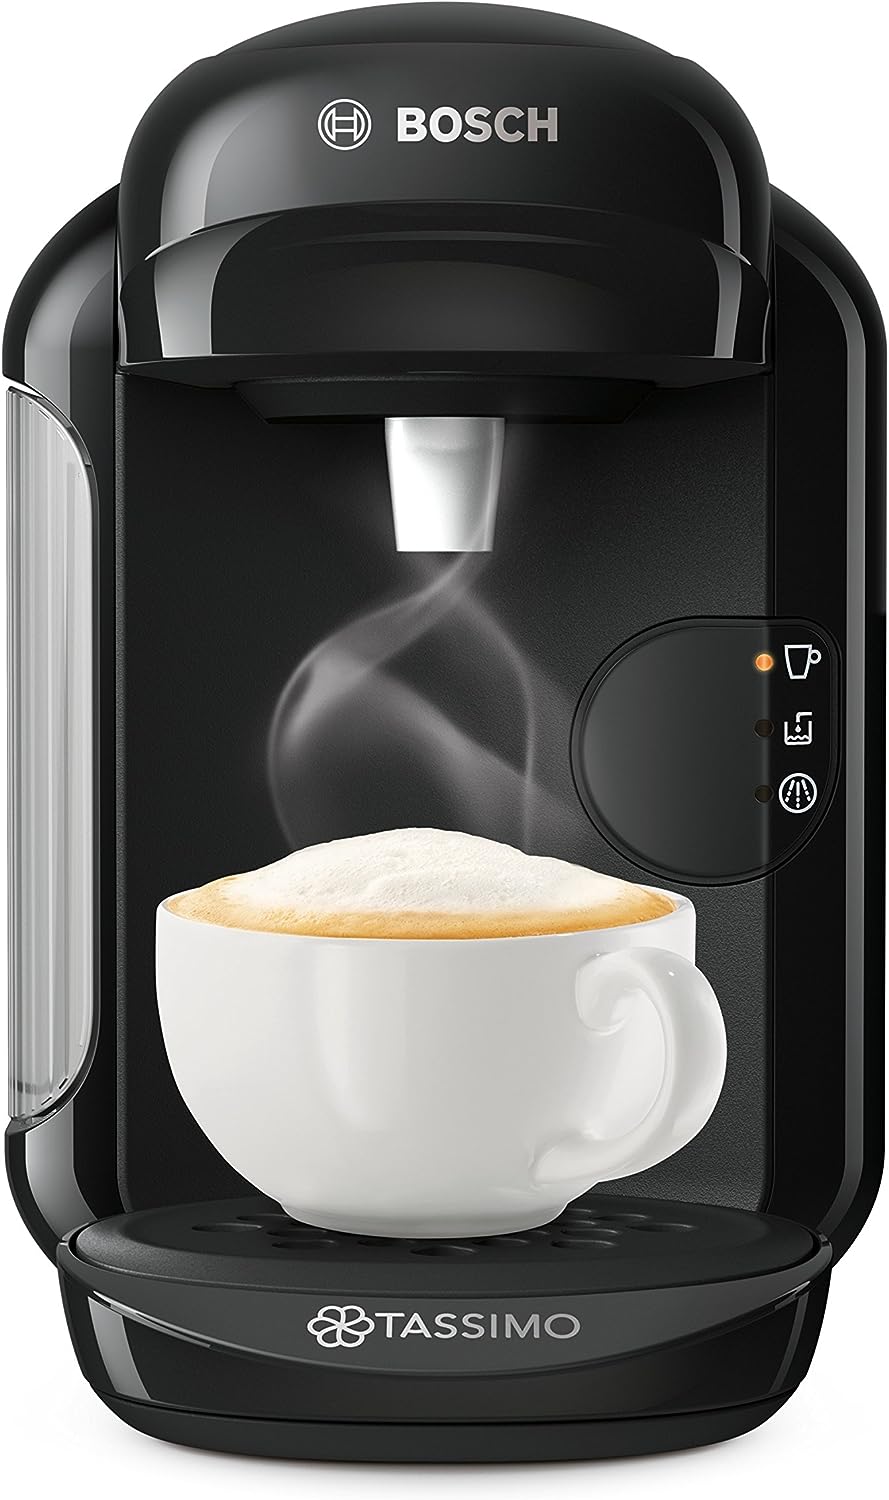 Bosch Tassimo Vivy 2 TAS1402GB Coffee Machine, 1300 Watt, 0.7 Litre - Black [Energy Class A]